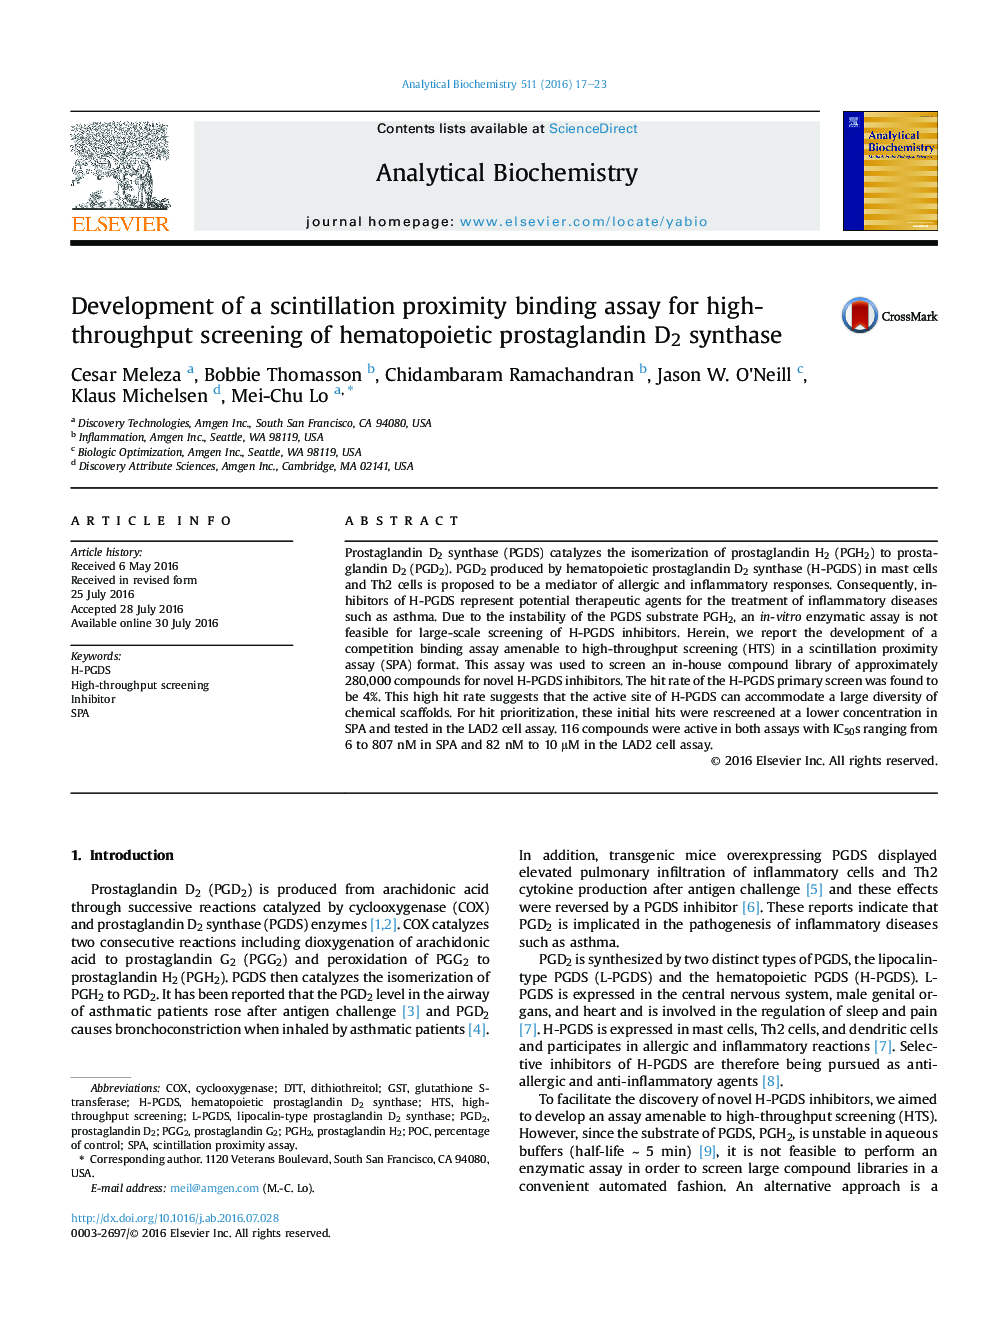 Development of a scintillation proximity binding assay for high-throughput screening of hematopoietic prostaglandin D2 synthase